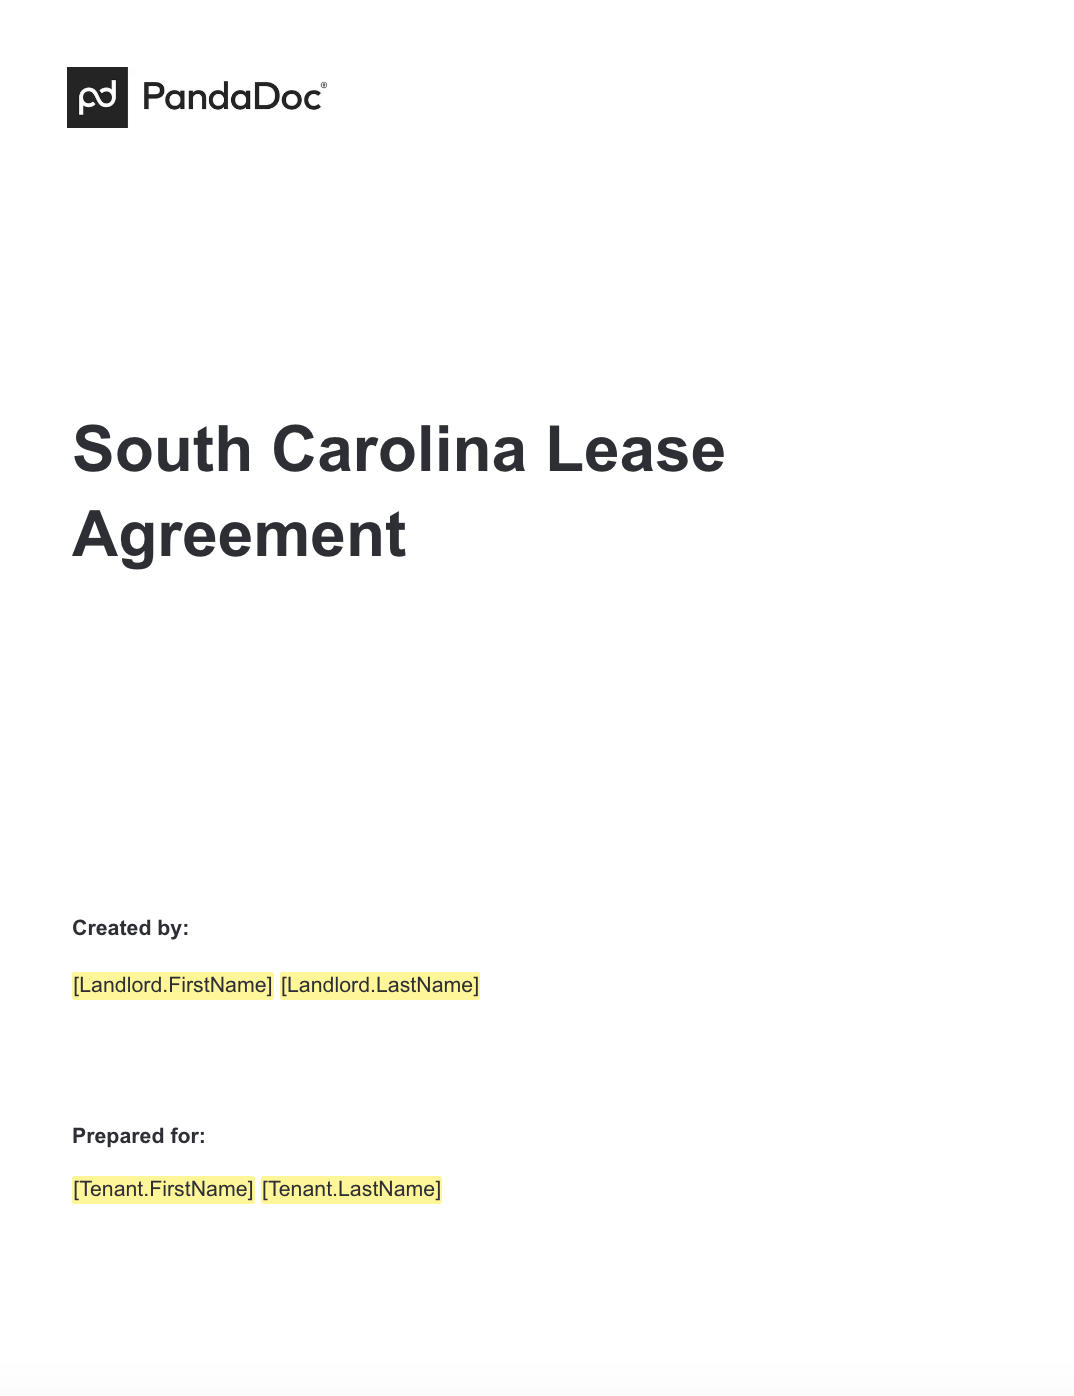 South Carolina Lease Agreements